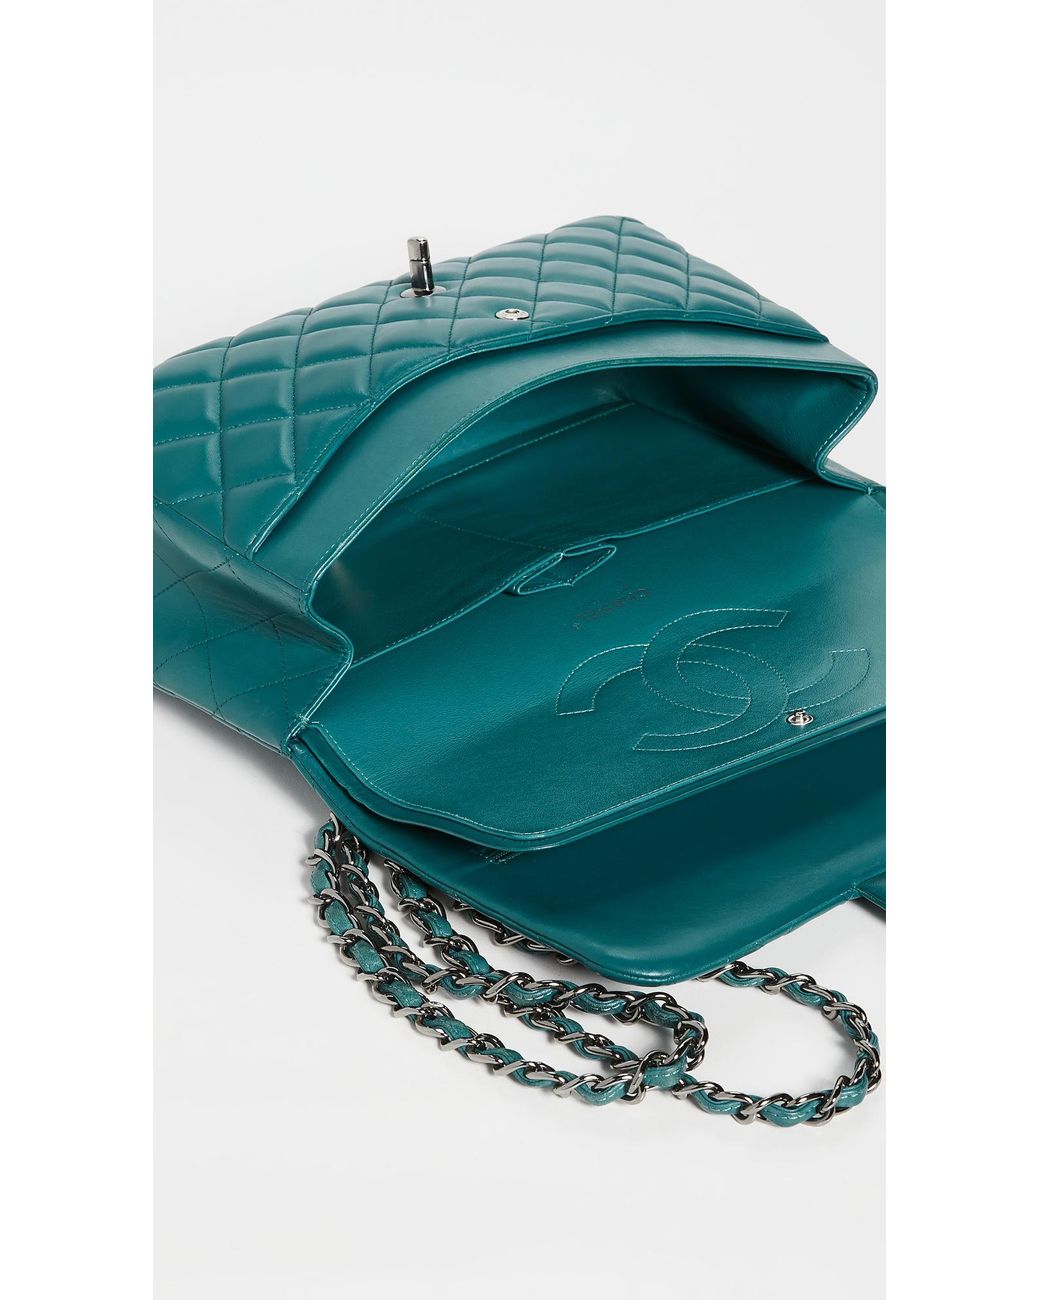 Chanel New Classic Jumbo Bag in Green